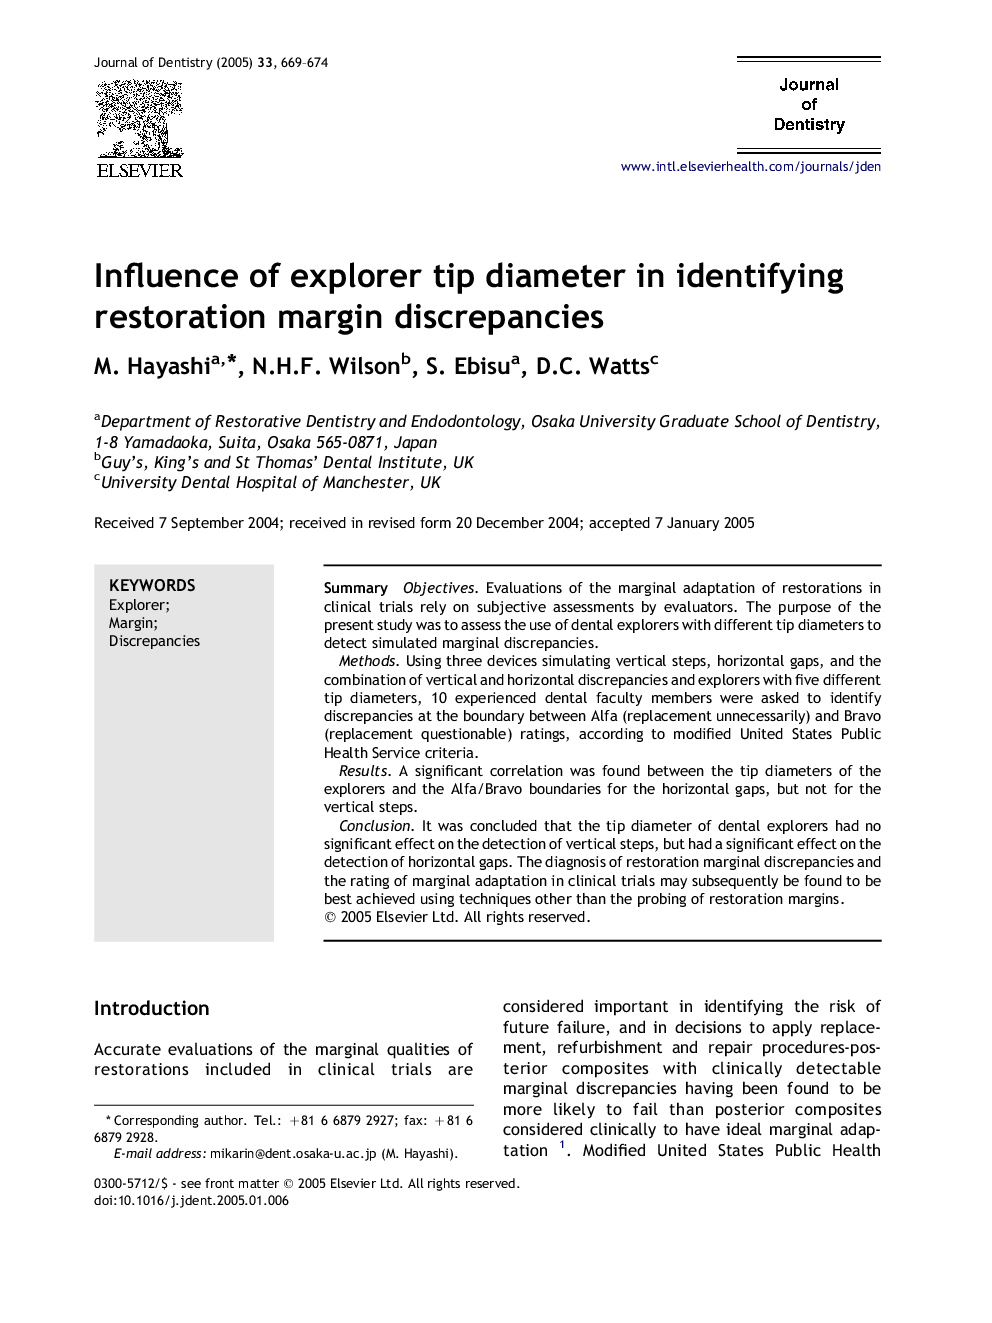 Influence of explorer tip diameter in identifying restoration margin discrepancies